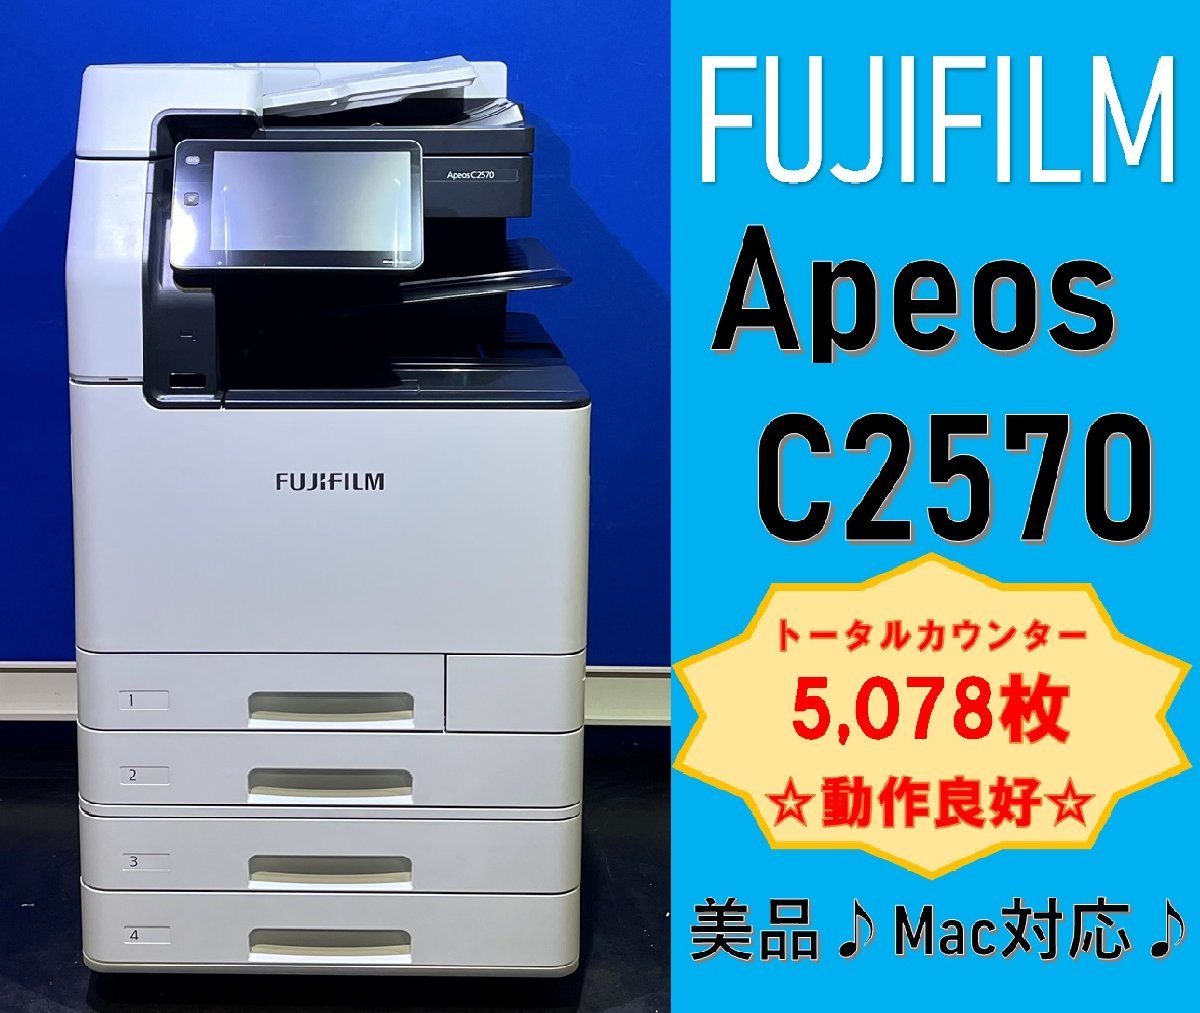 The Fuji Xerox - Main unit - Multi use machine and copy machine